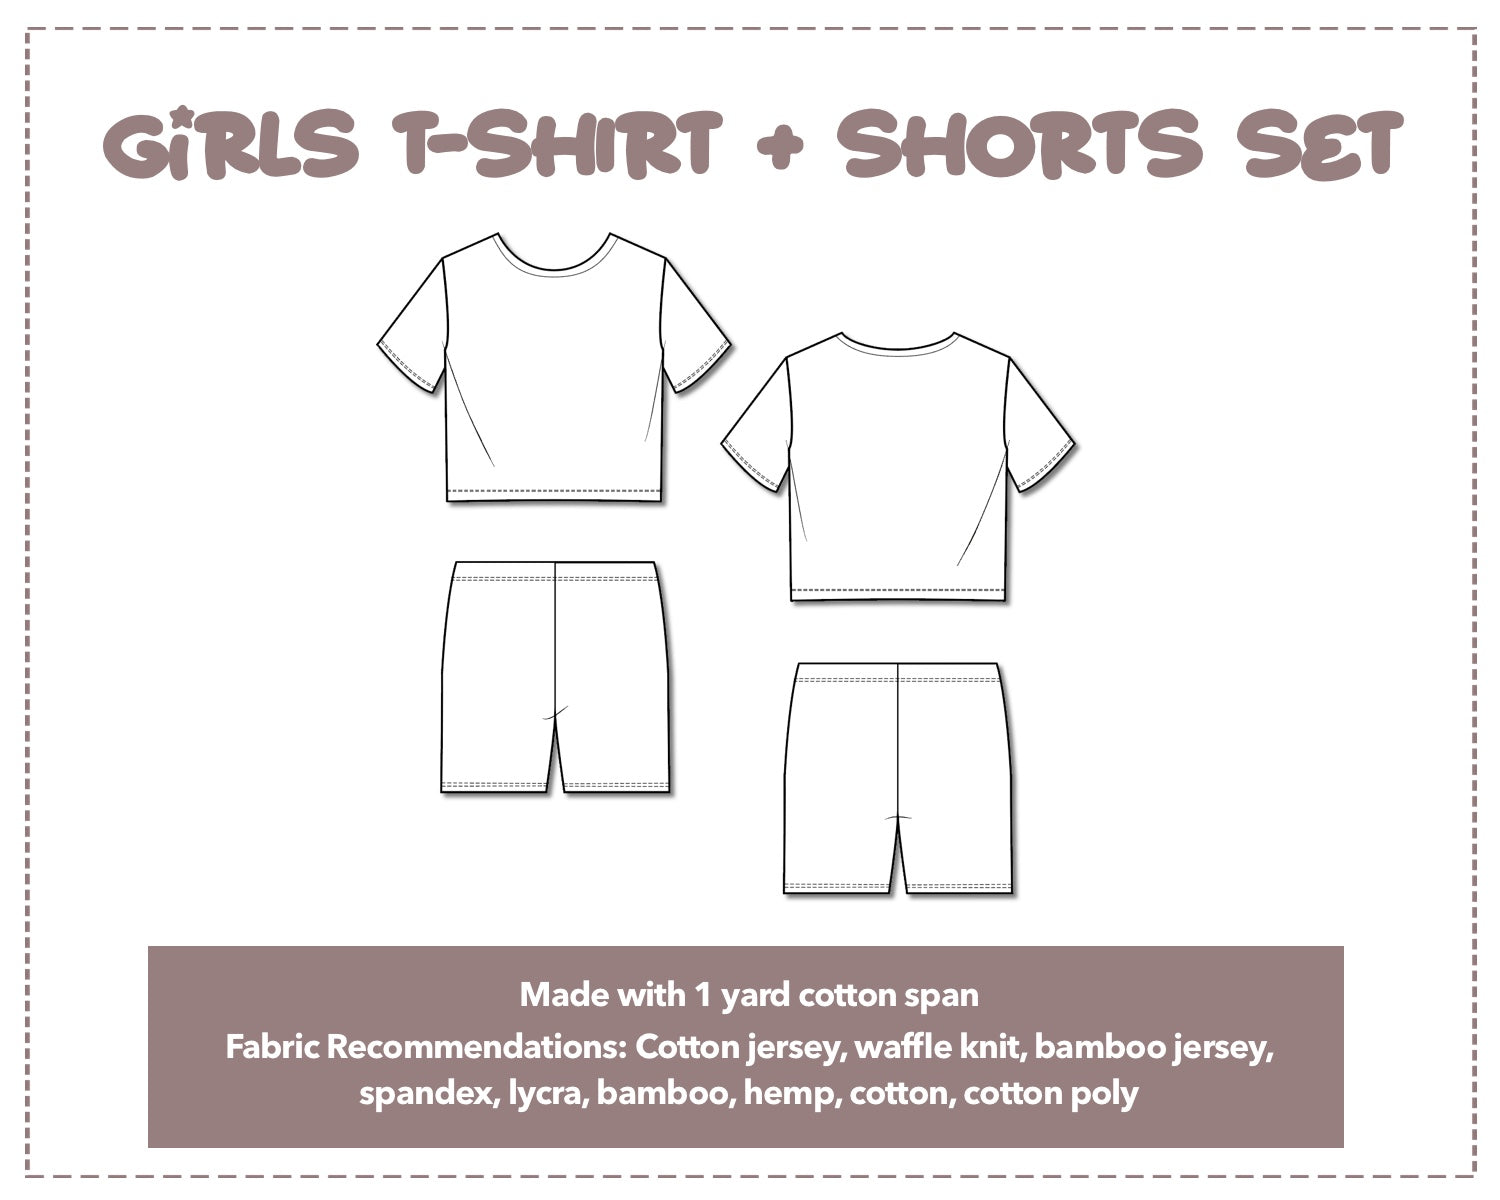 Illustration and detailed description for Girls T-Shirt and Biker Shorts Set sewing pattern.